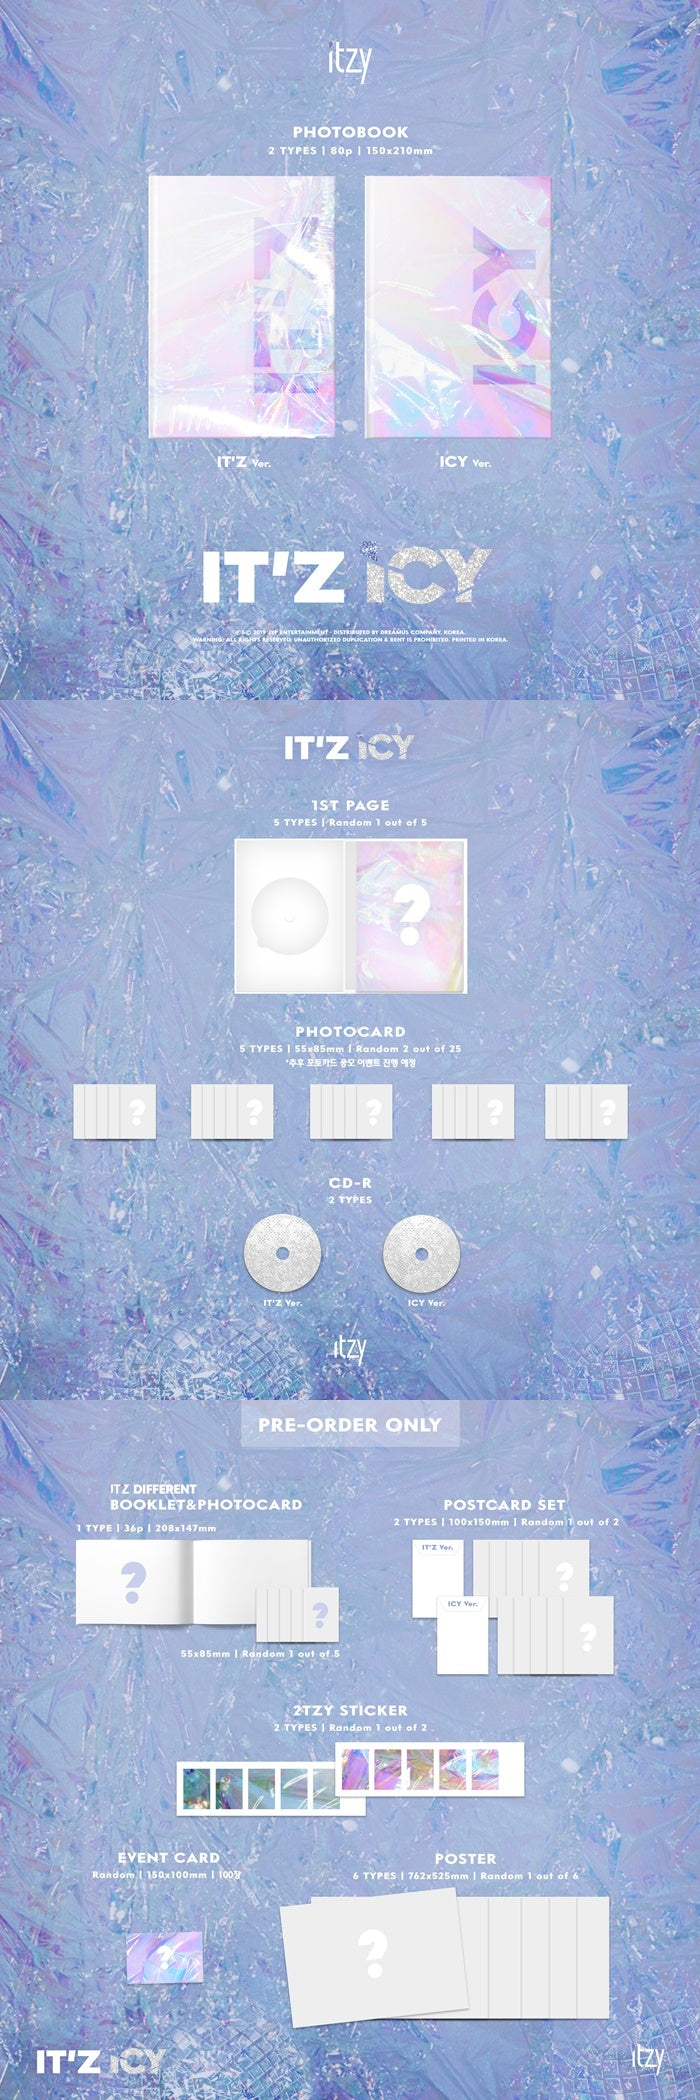 ITZY JAPAN DEBUT BEST ALBUM - IT'Z ITZY – SubK Shop